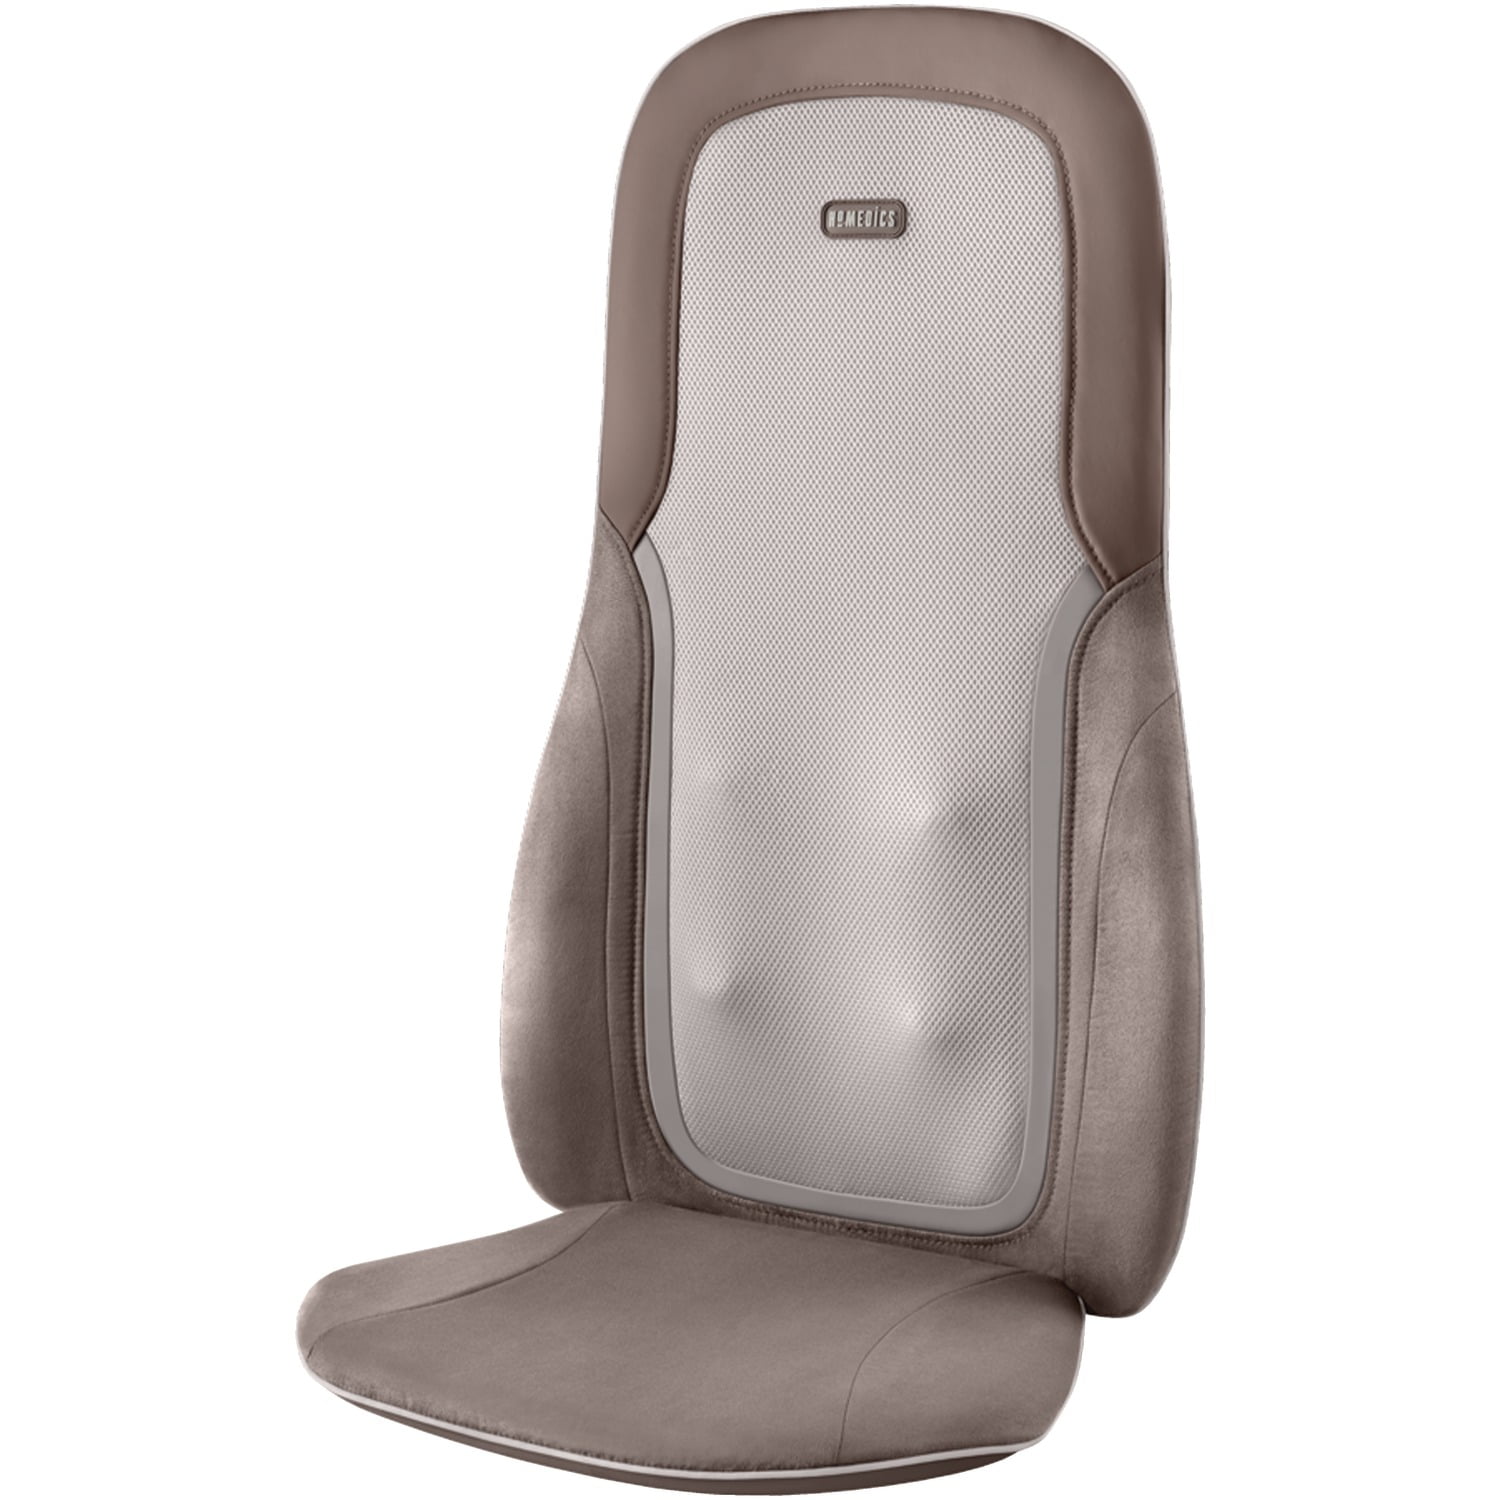 Cordless Shiatsu Massage Cushion with Heat MCS-621H - health and